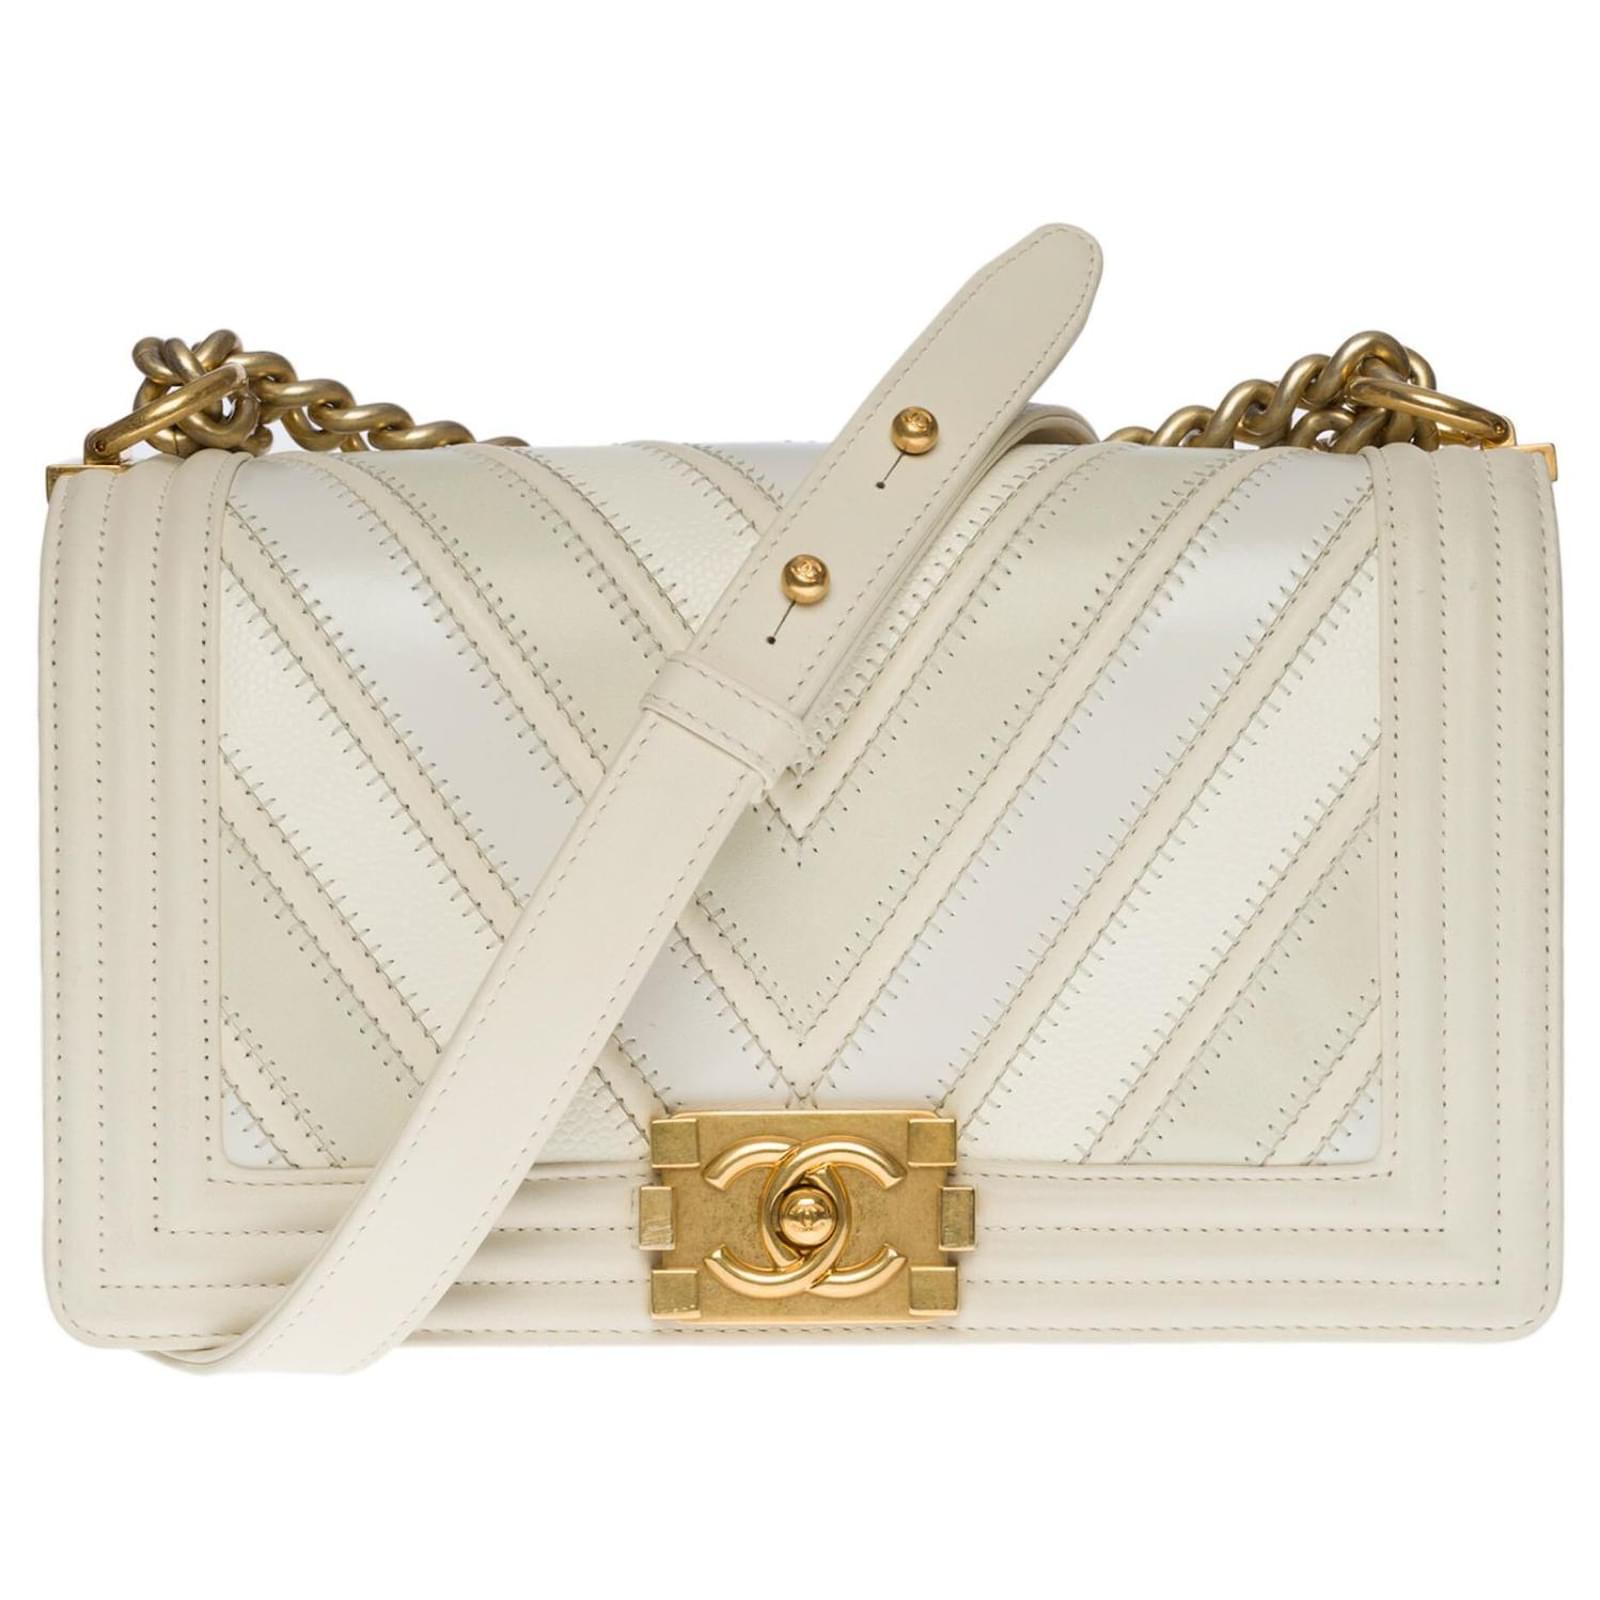 Splendid & Rare Chanel Boy handbag 4 herringbone colors in off